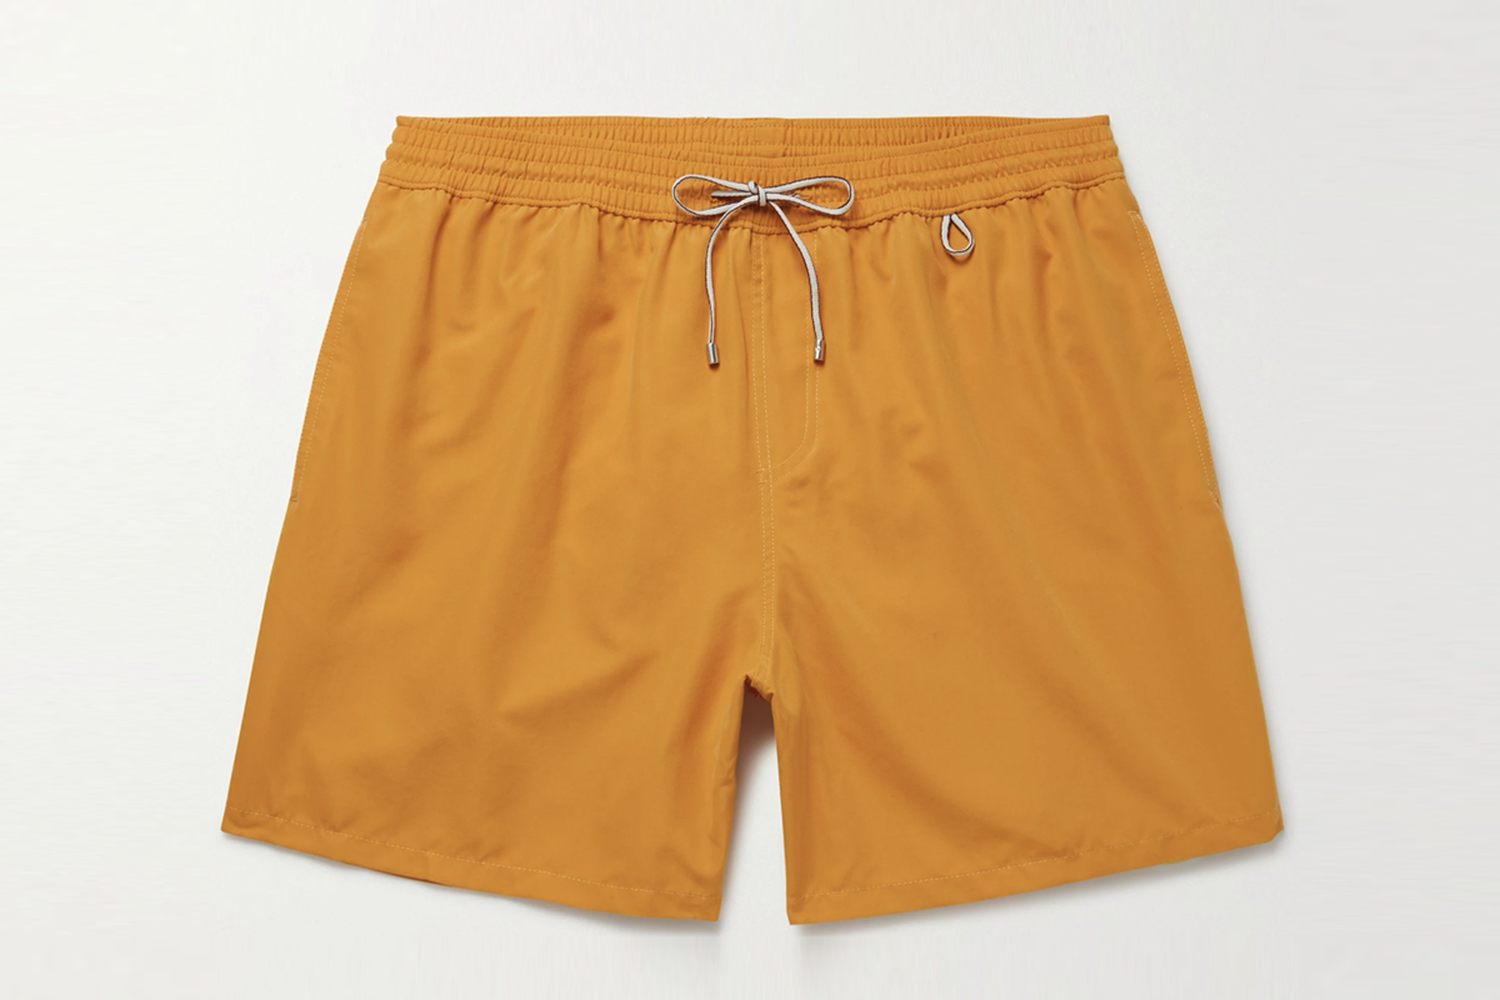 SINOVAL Camouflage Pattern Orange Mens Summer Casual Swimming Shorts Beach Board Shorts